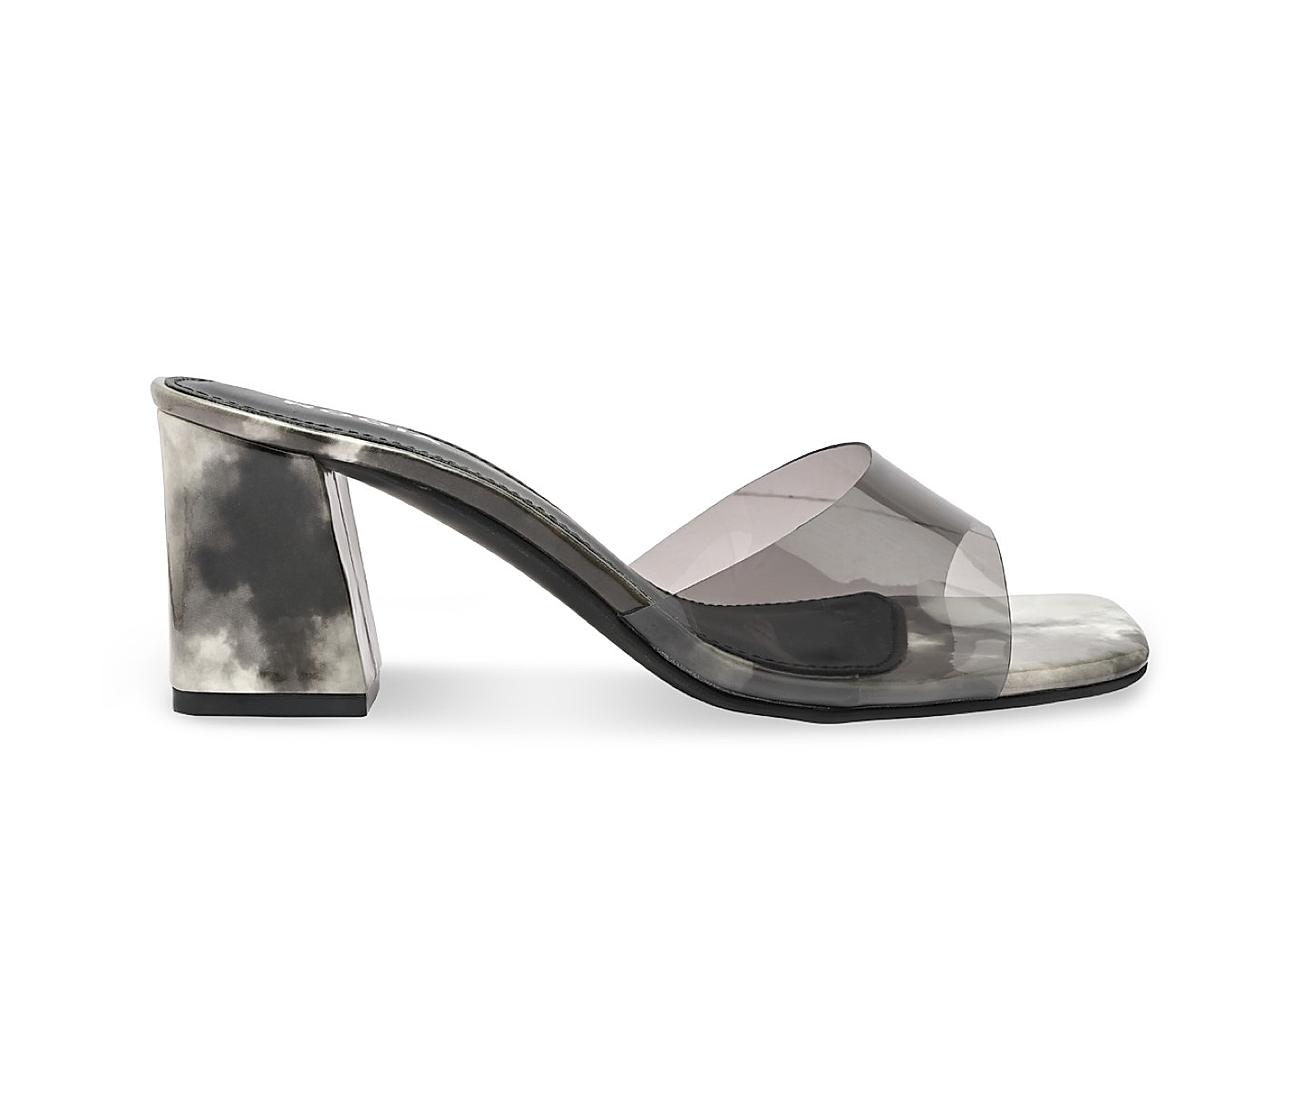 Prada Black and Silver Block Heel Peep Toe Sandals Uk 6 Eu 39 | eBay